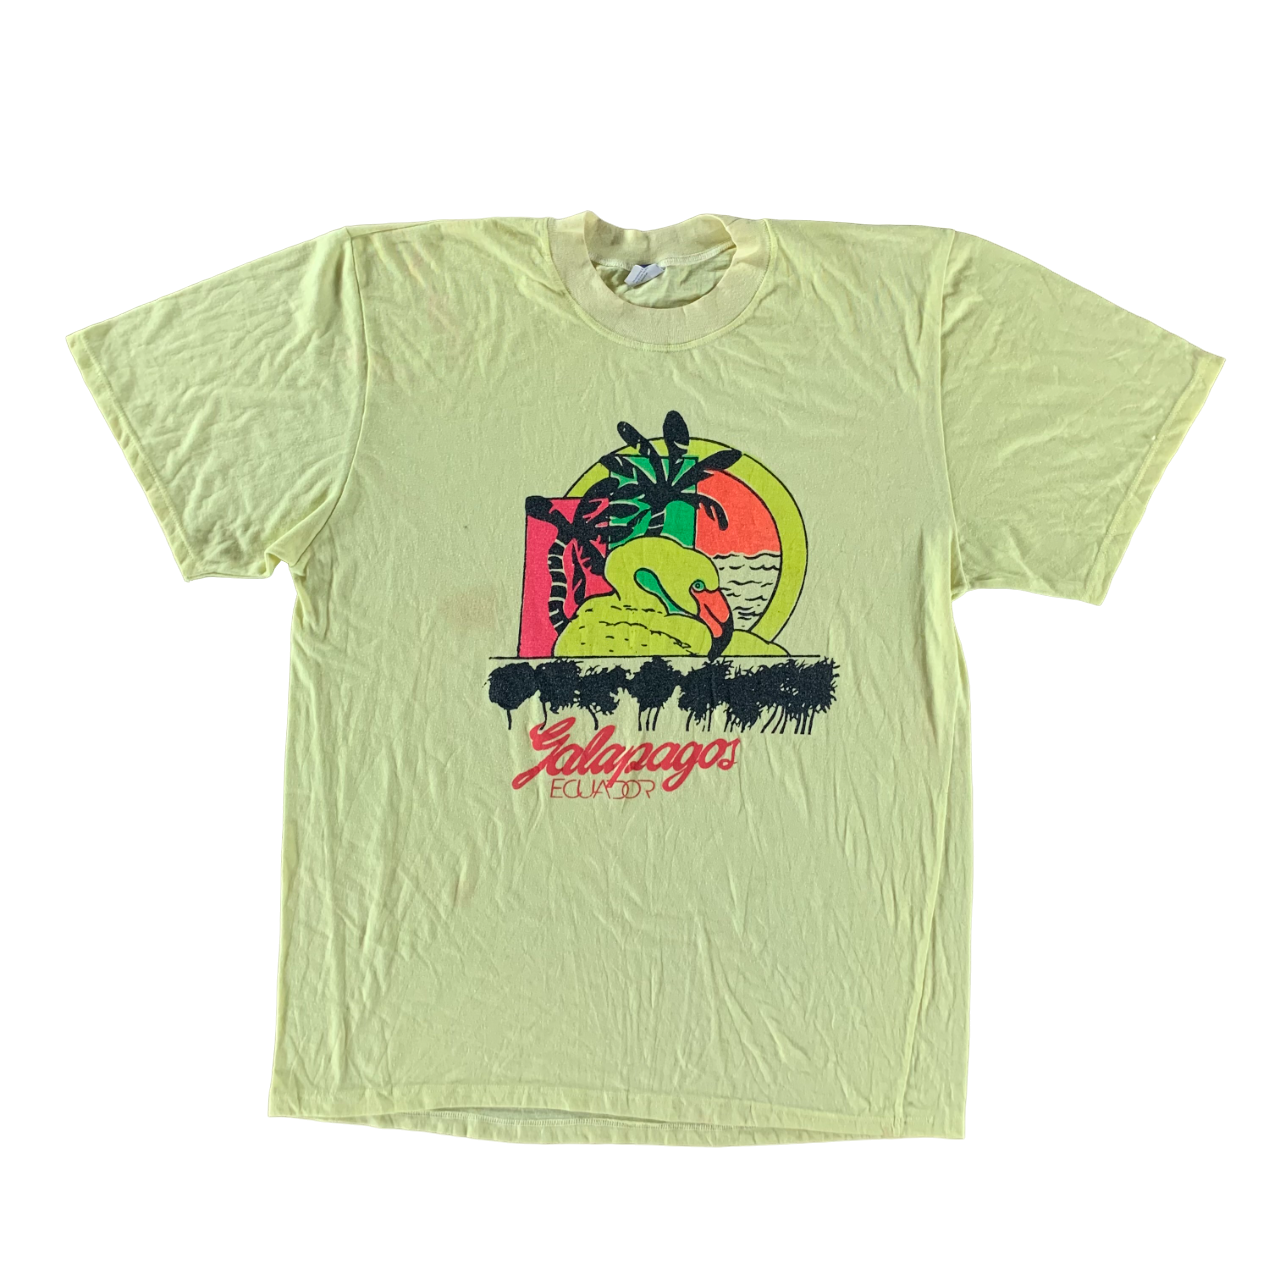 Vintage 1990s Galapagos T-shirt size XL